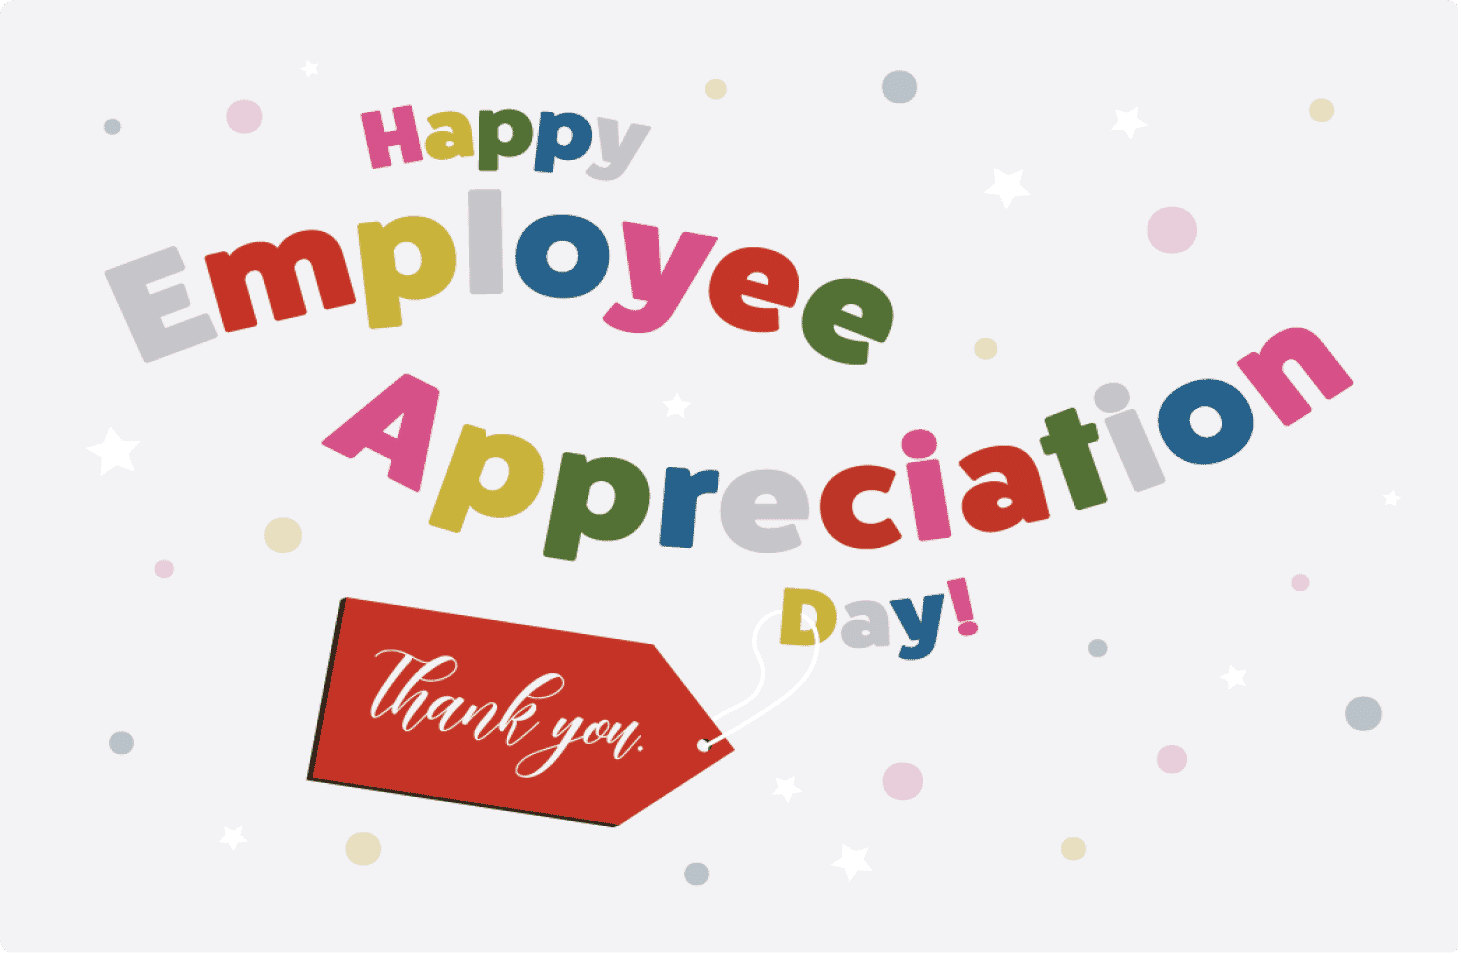 Happy Employee Appreciation Day! Thank you!